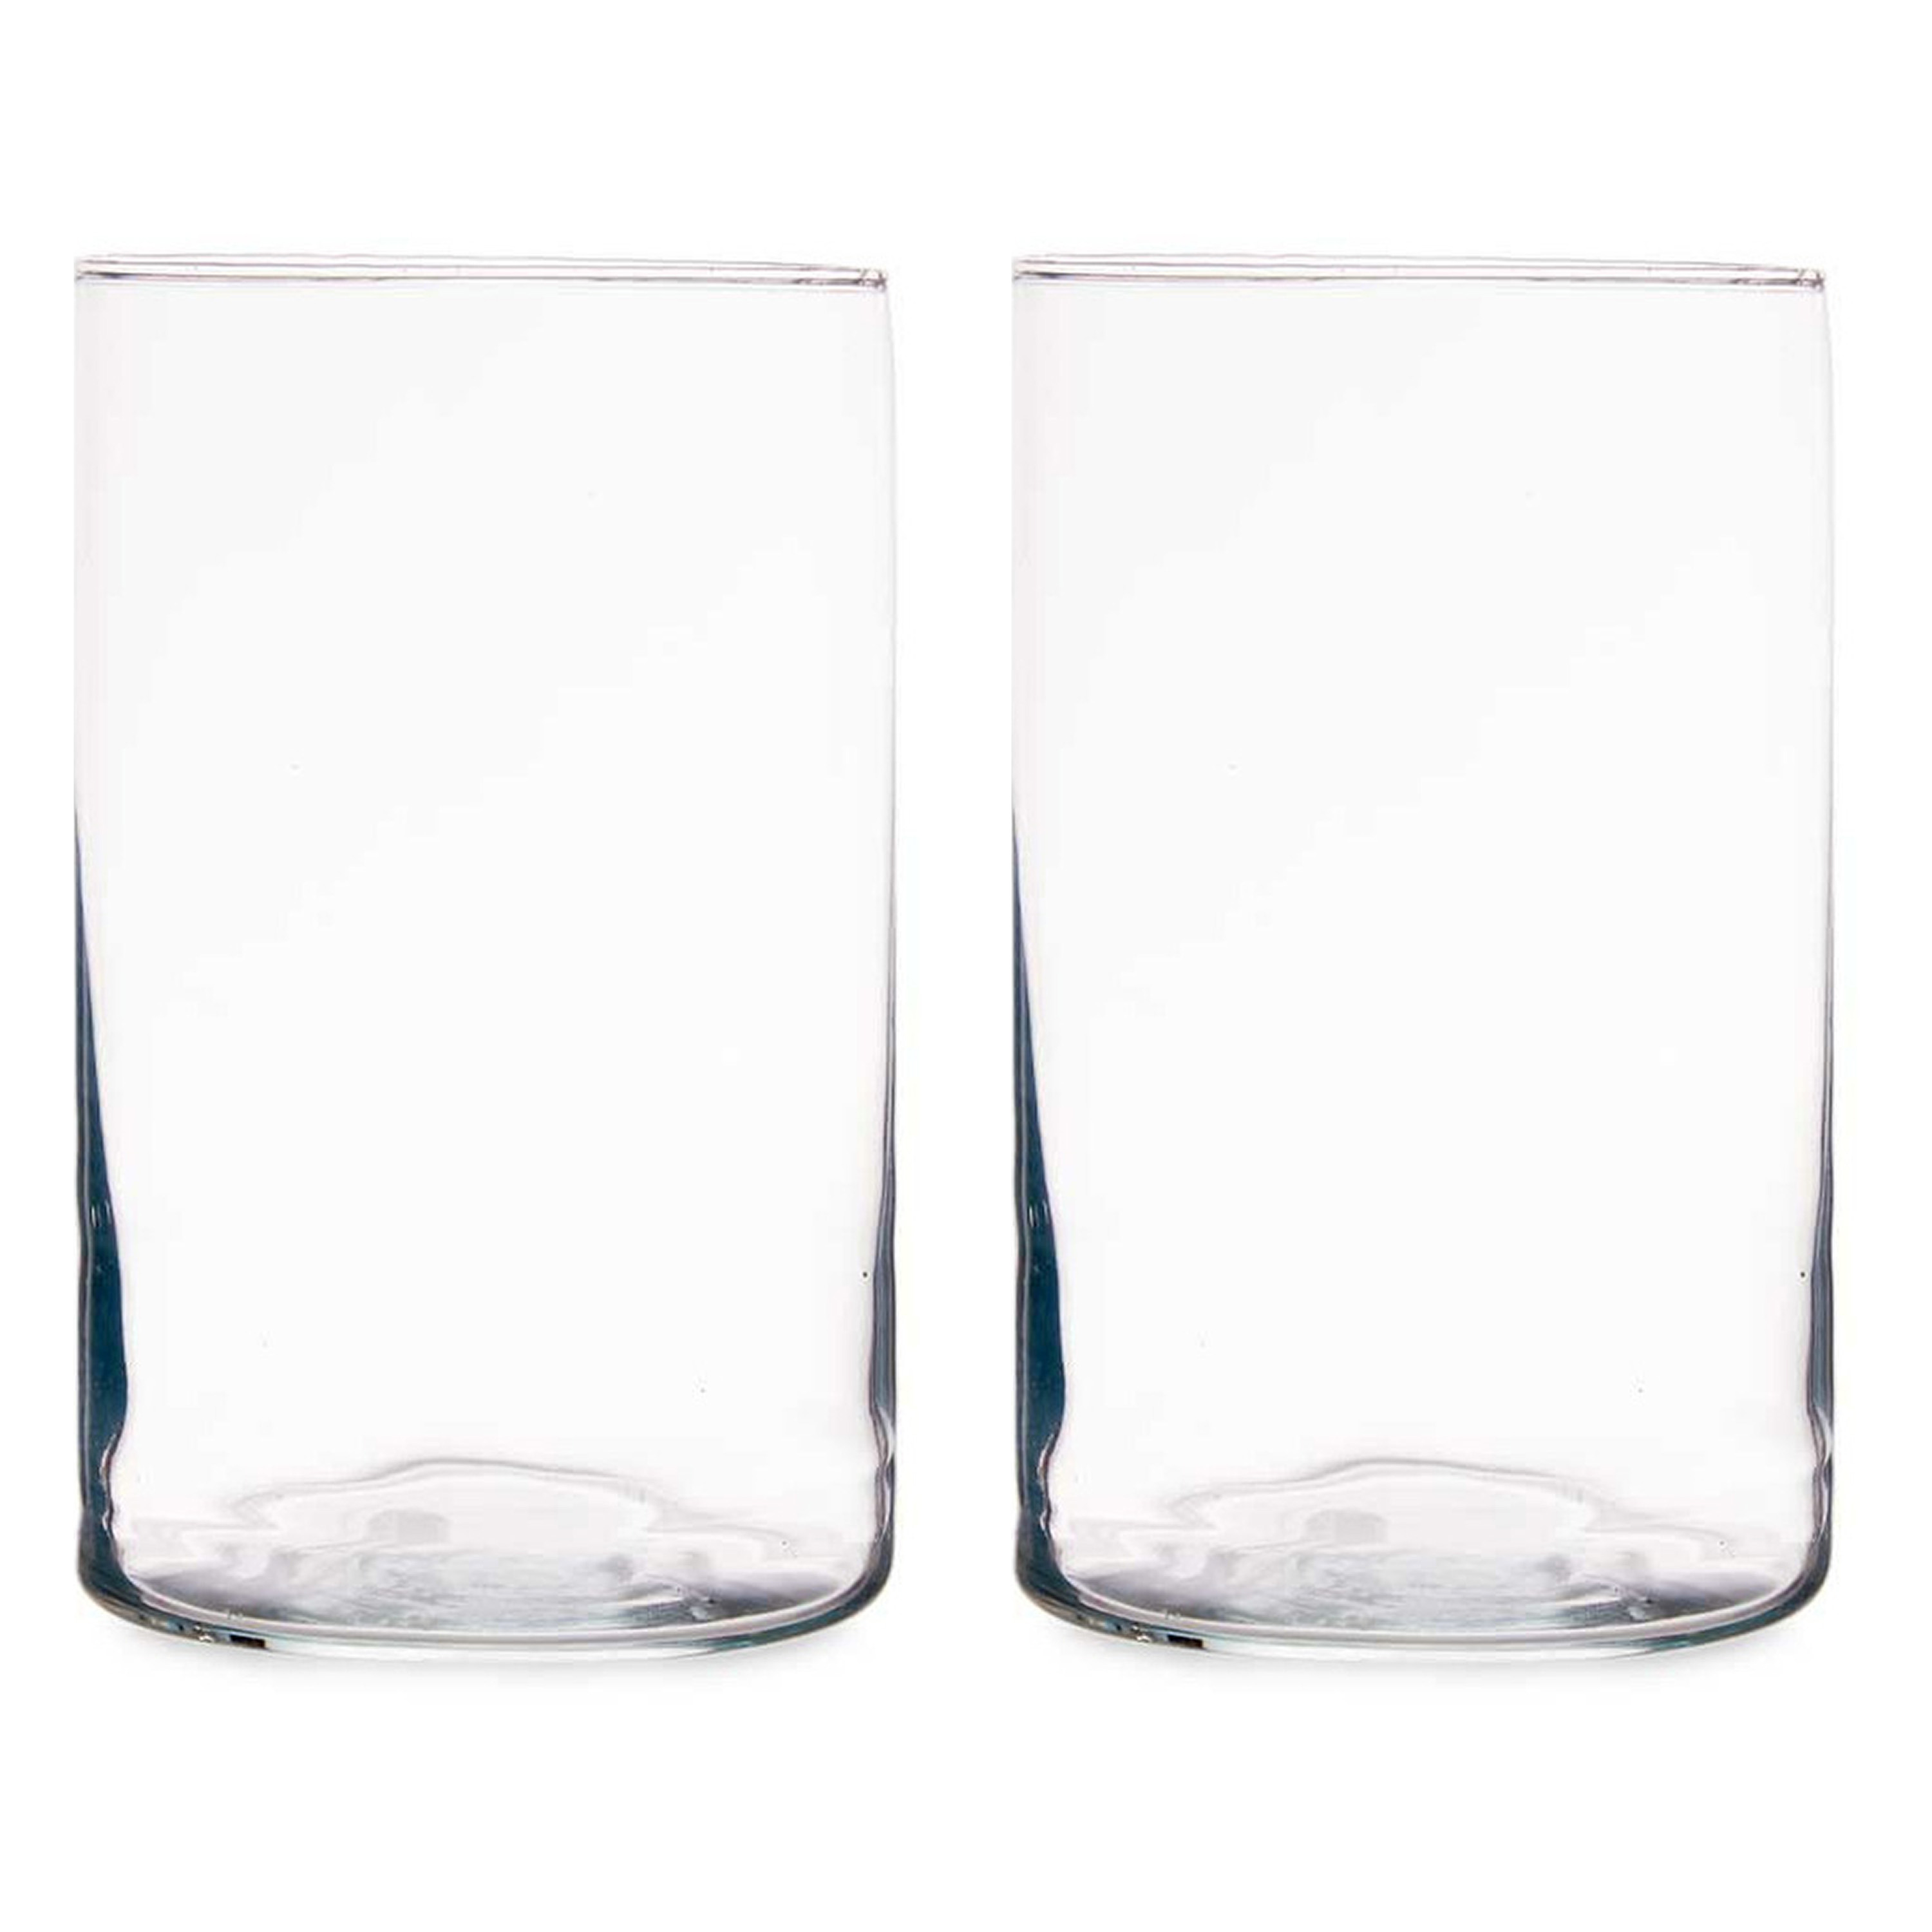 Giftdecor Bloemenvazen 2x stuks - cilinder vorm - transparant glas - 12 x 20 cm -